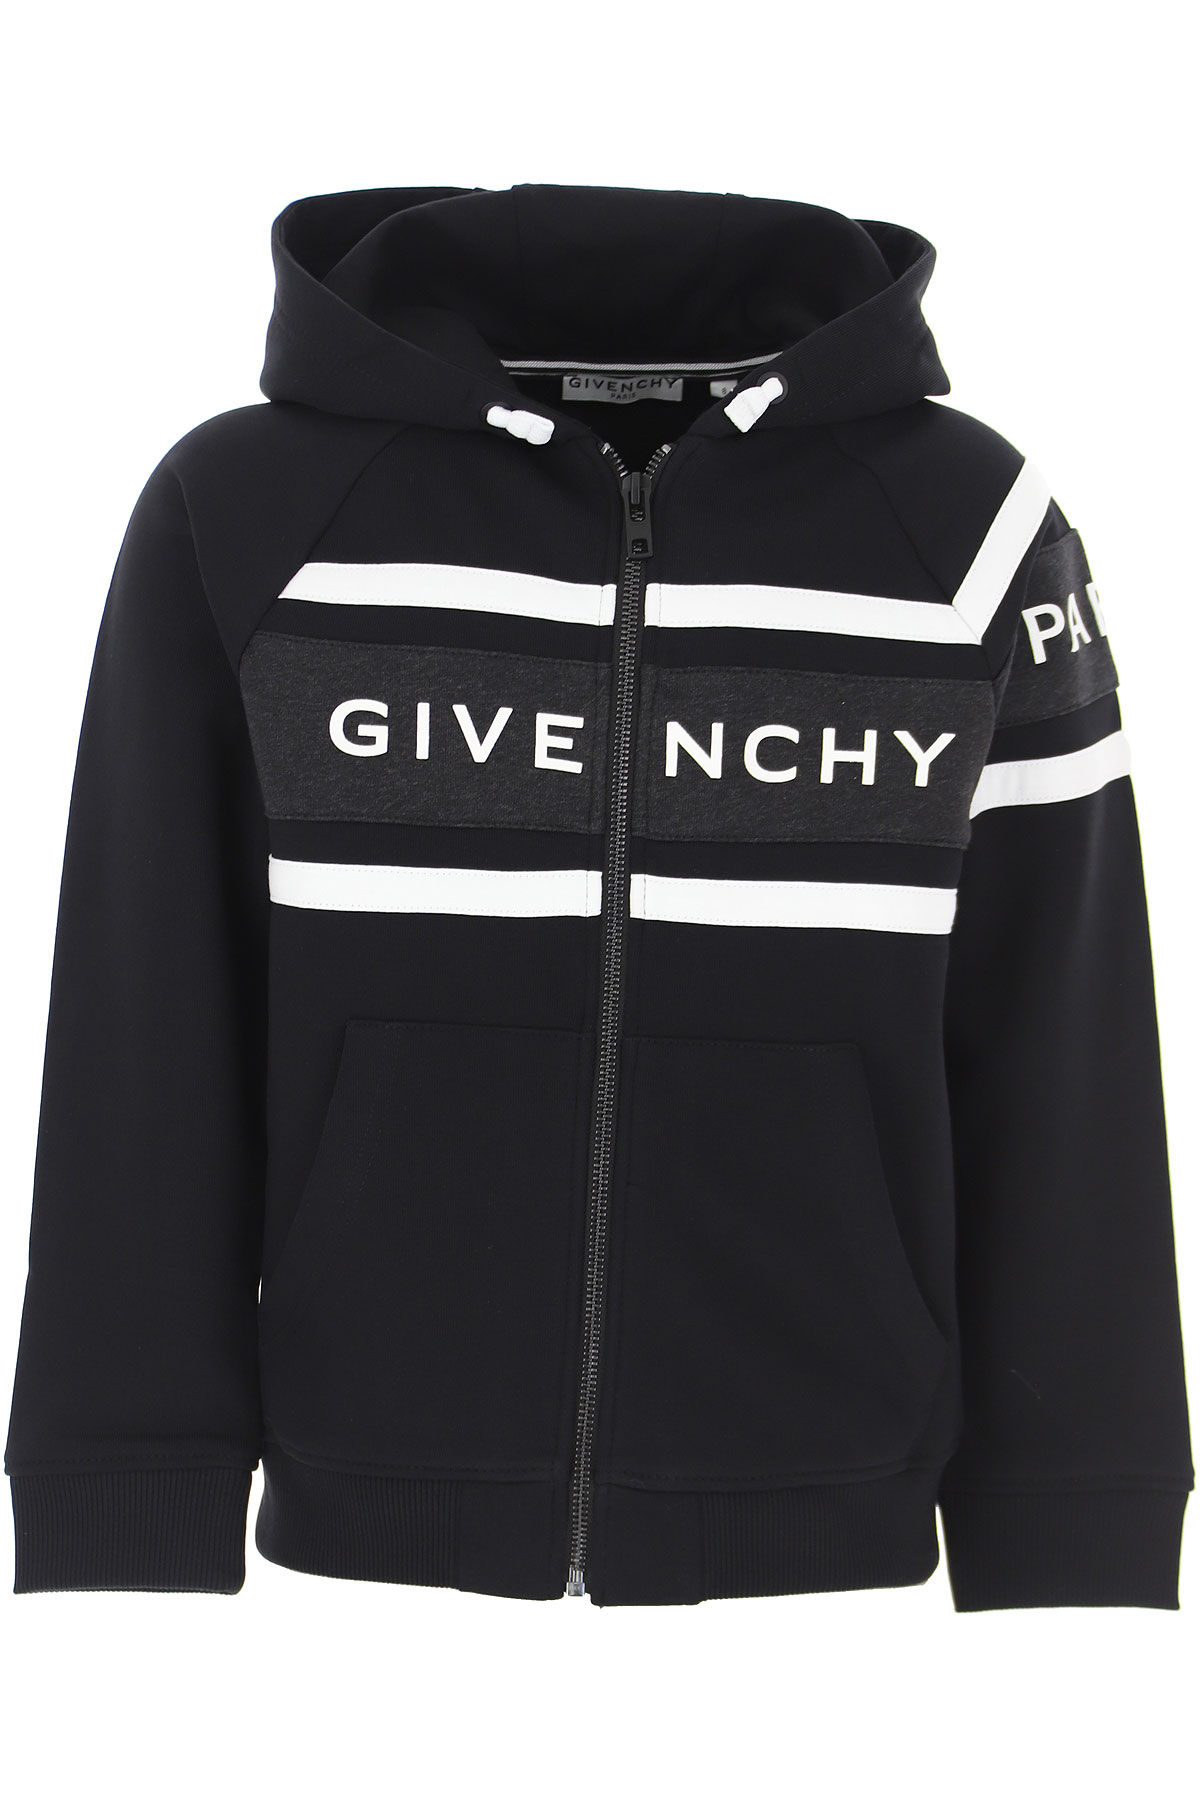 Kidswear Givenchy, Style code: h25195-09b-